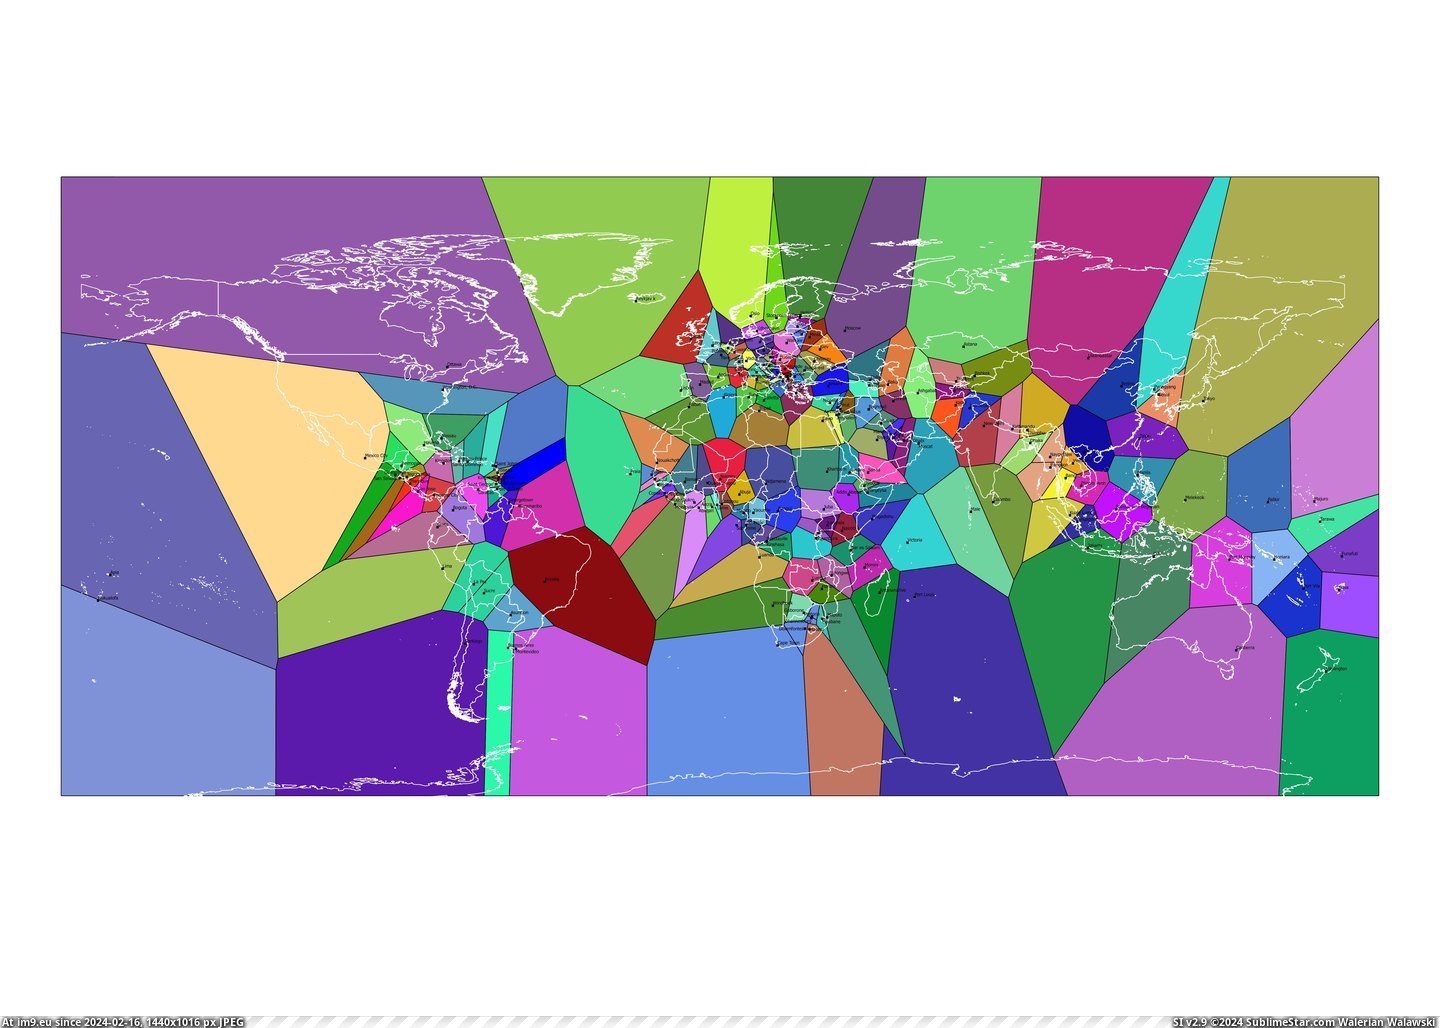 #World #Equidistant #Capitals [Mapporn] Equidistant world capitals [OC] [7015x4960] Pic. (Image of album My r/MAPS favs))